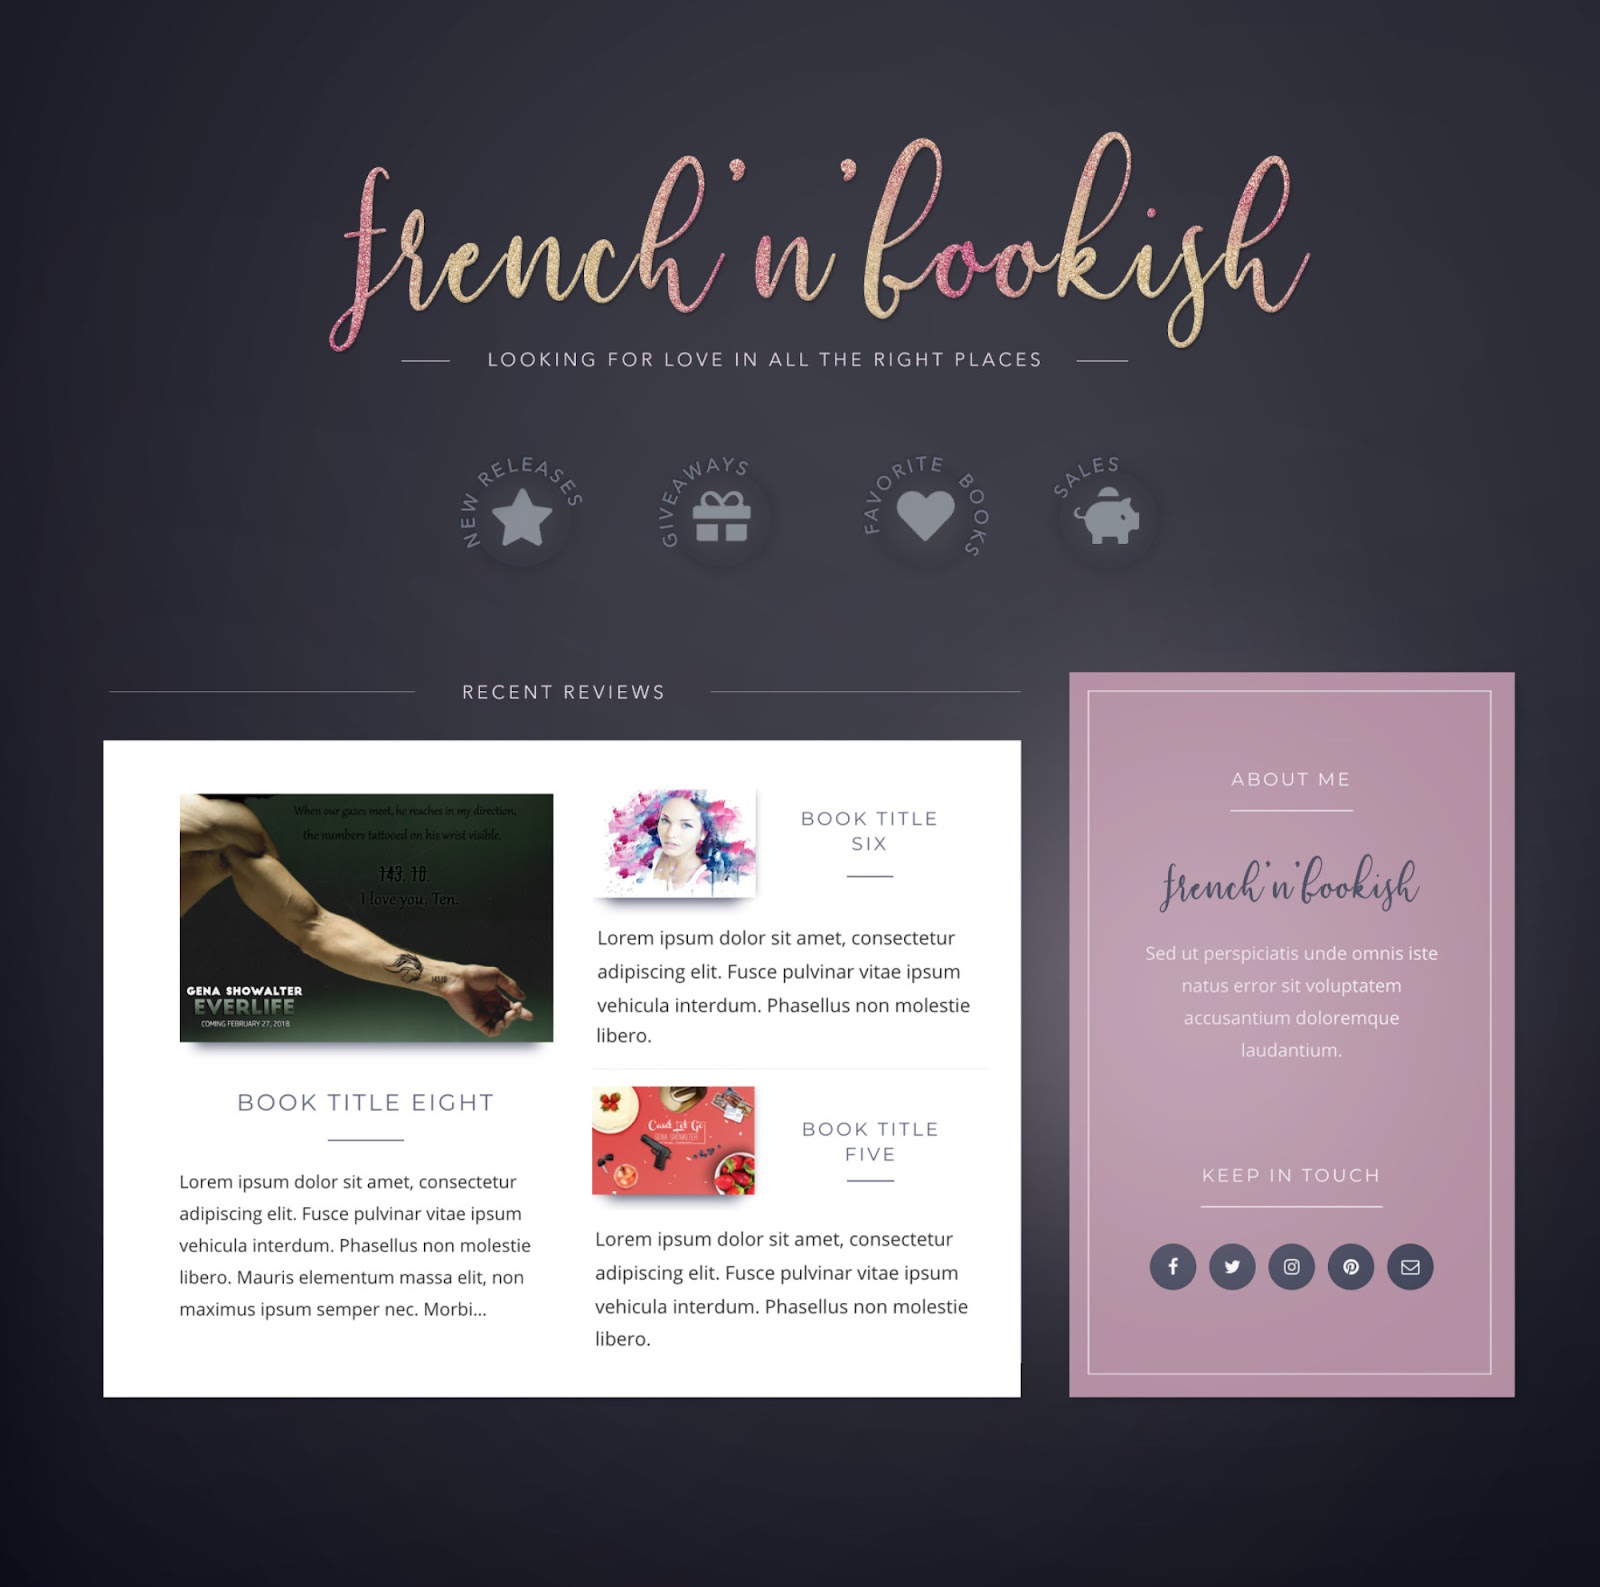 French 'n' Bookish - FlyBirdsBox Design